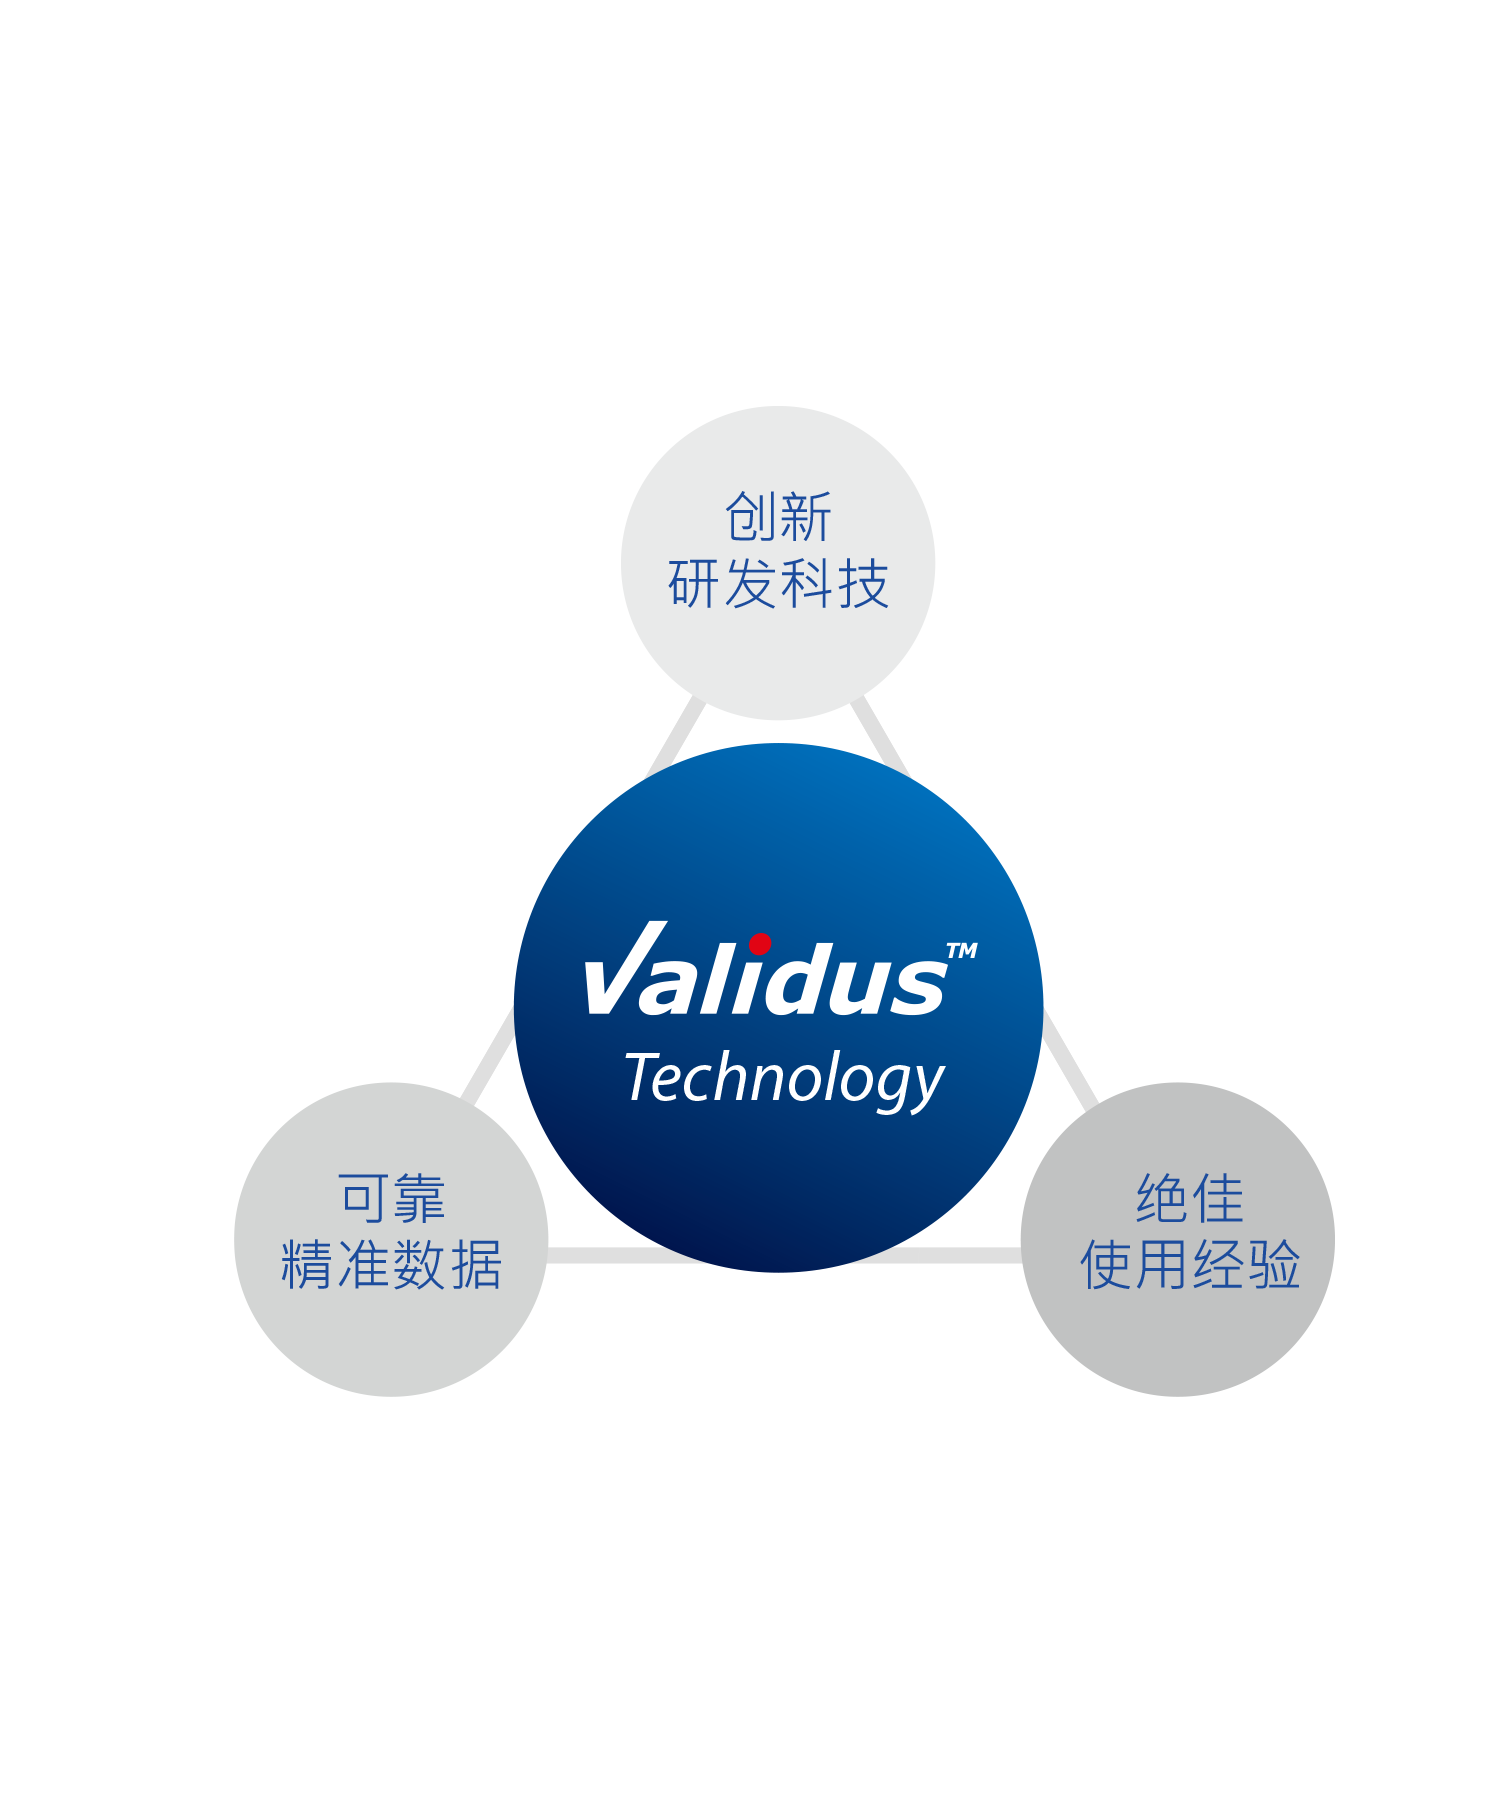 pro-img/15 17 Validus technology and strips/Validus_產品圖_CN.png